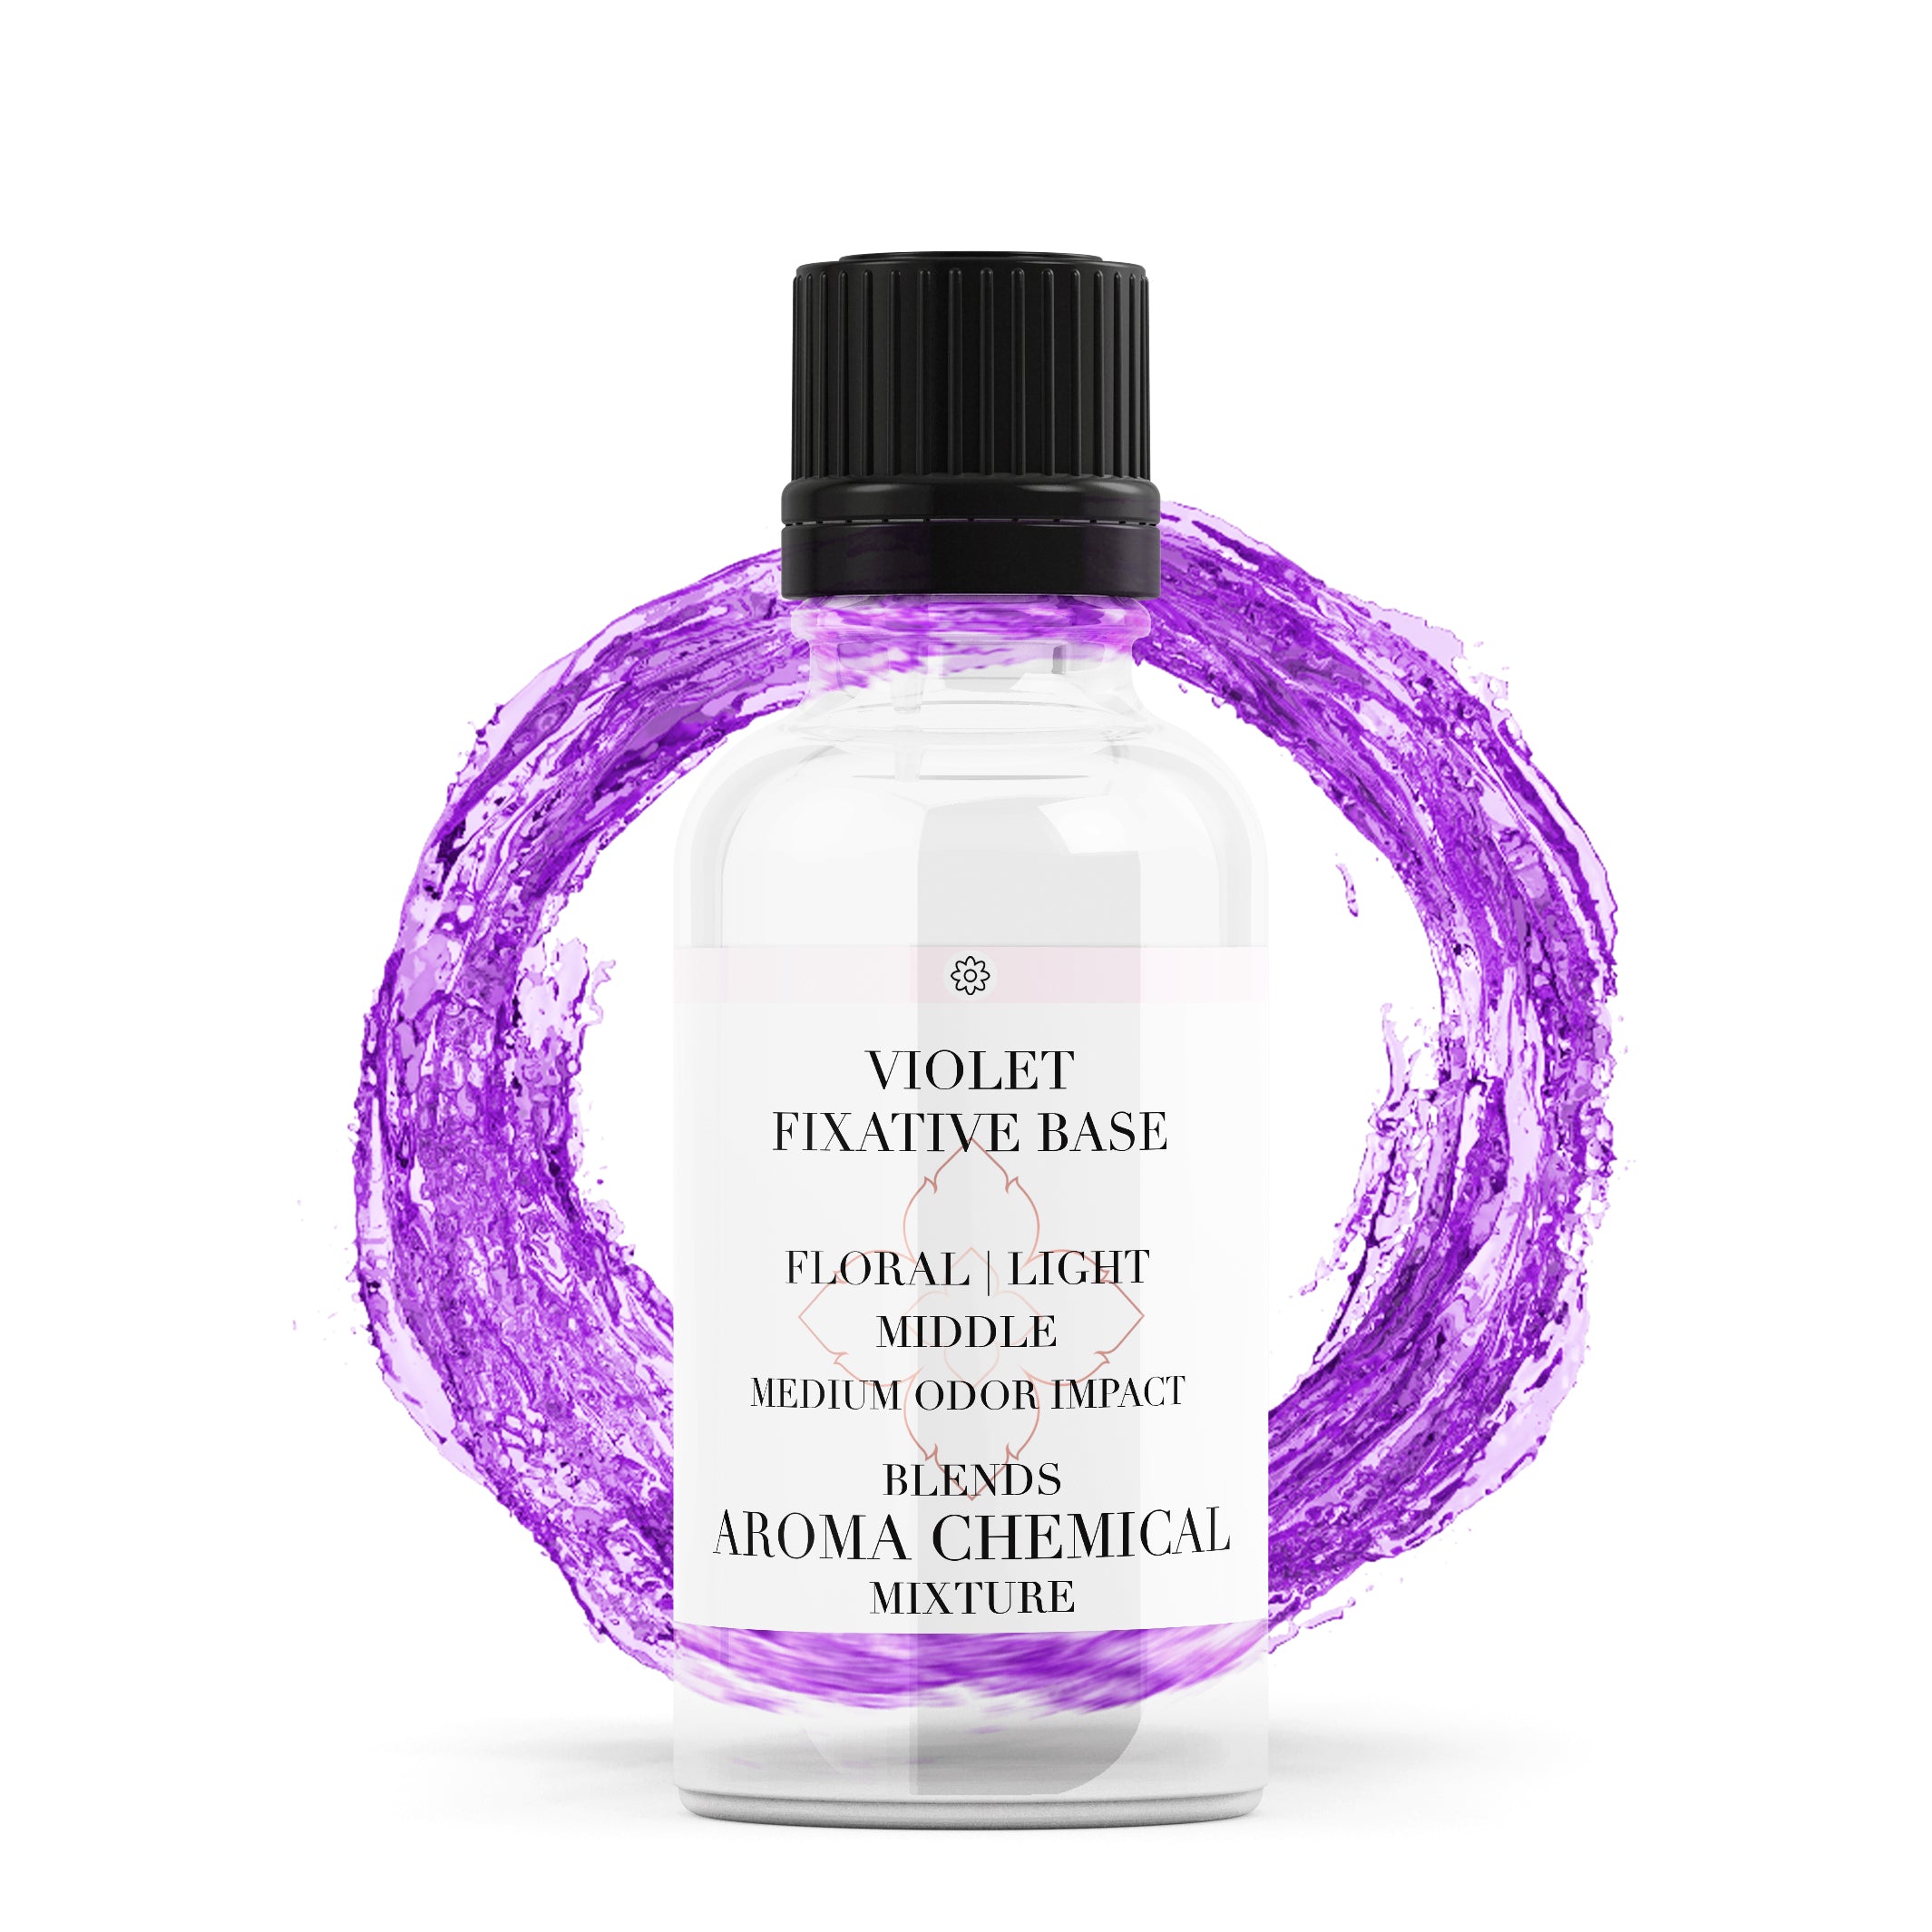 VIOLET FIXATIVE BASE – Creating Perfume